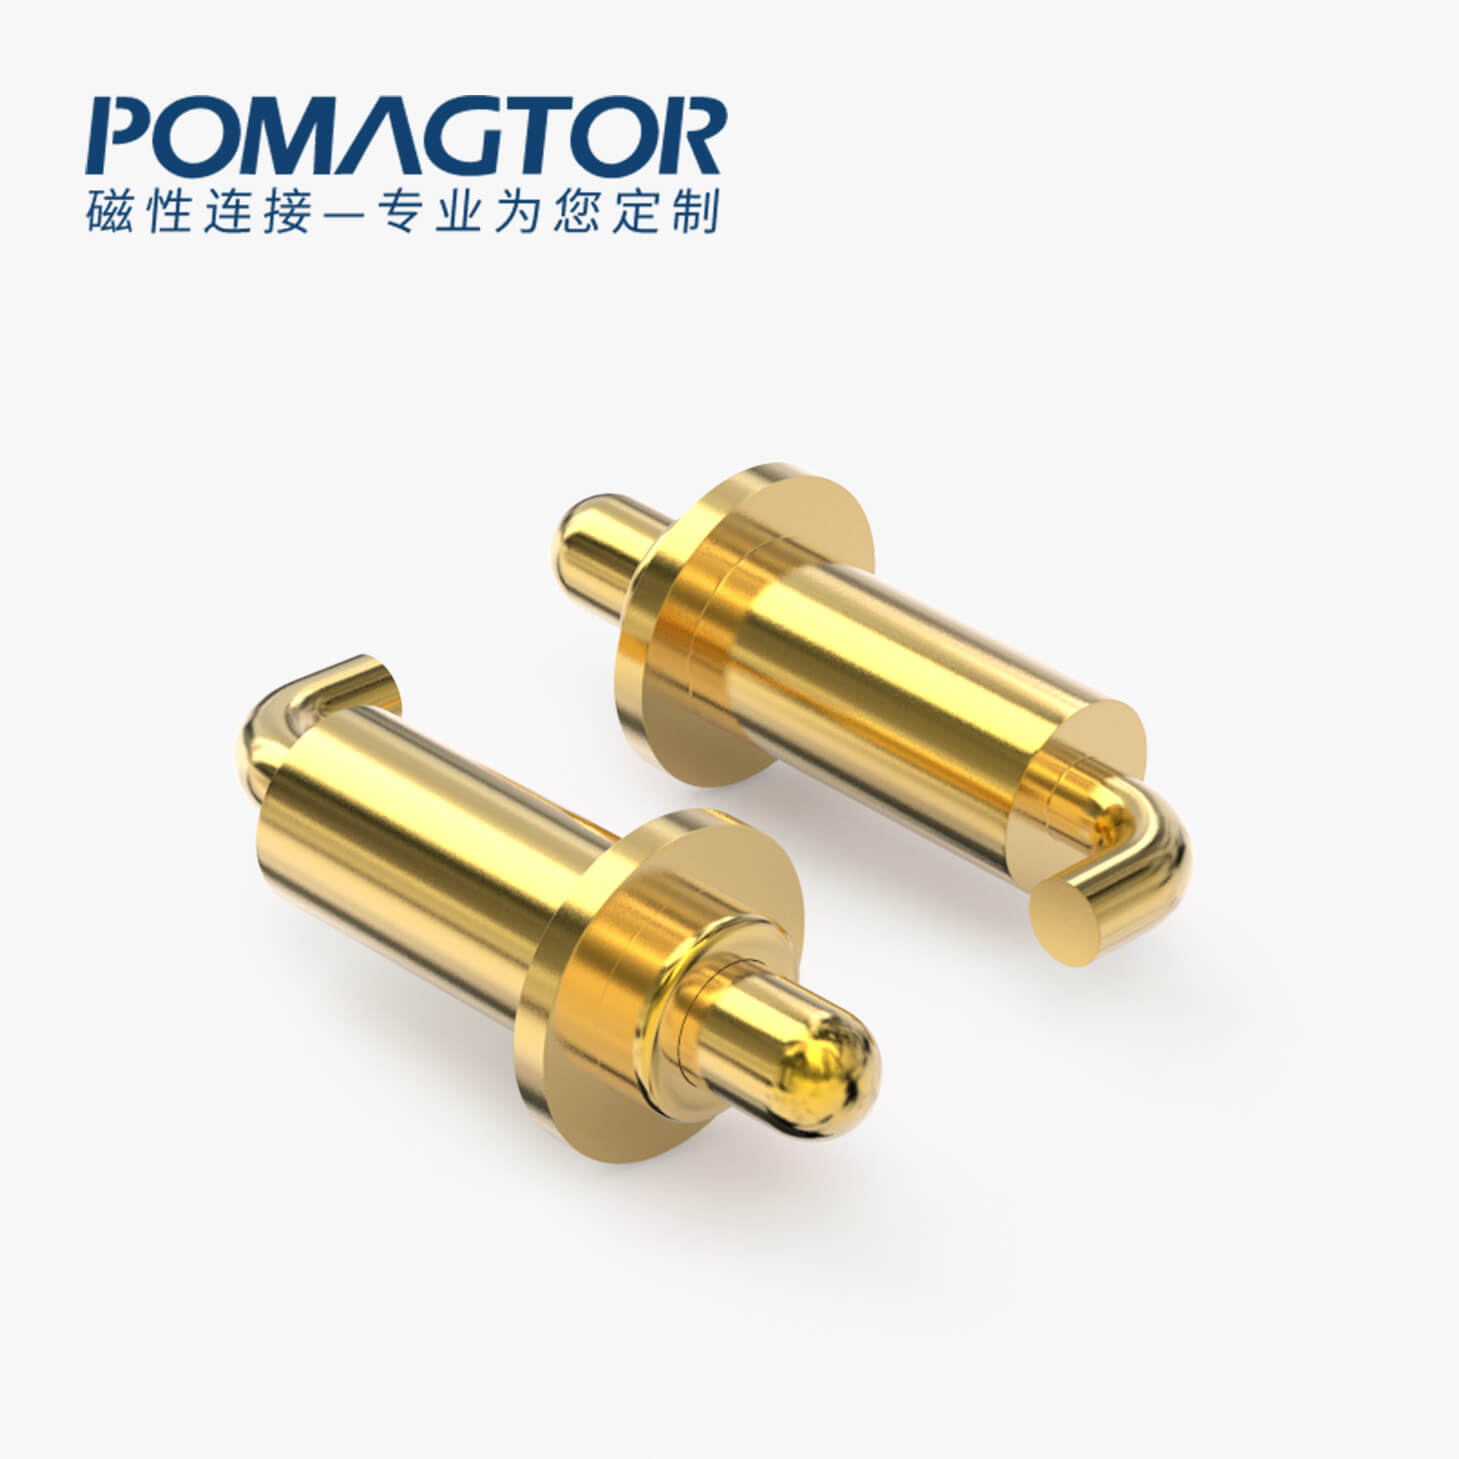 POGO PIN 折弯式：电镀黄铜Au5u，电压5V，电流3A，工作行程1.0mm:60±15gf，弹力10000次+，工作温度-30°~85°